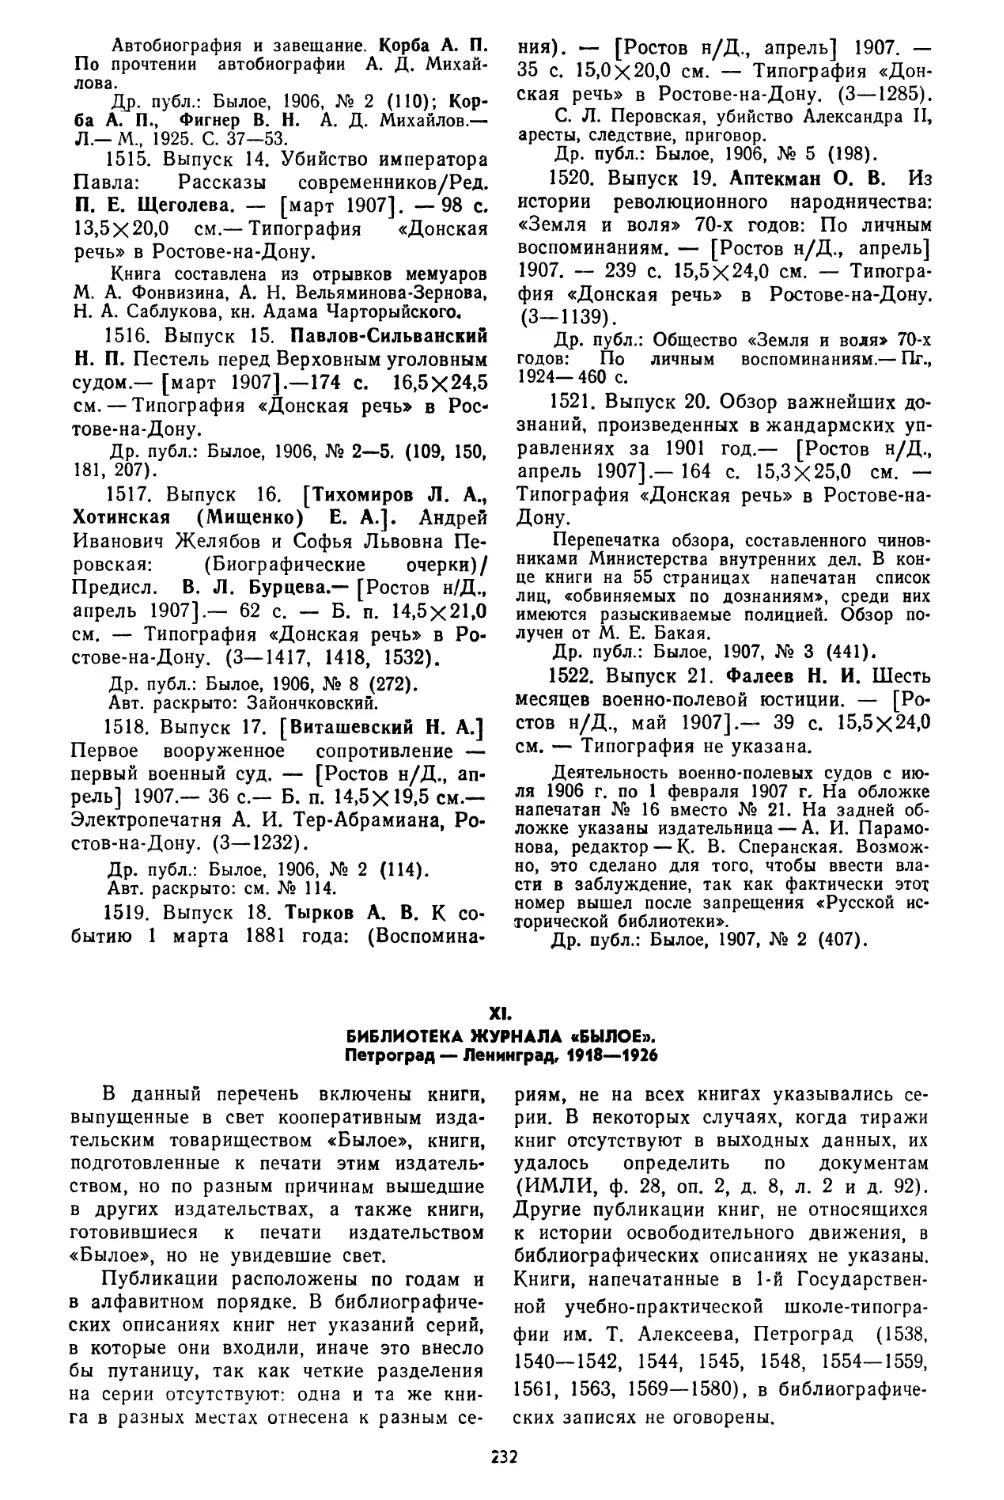 XI. Библиотека журнала «Былое». Петроград— Ленинград, 1918—1926, № 1523—1592